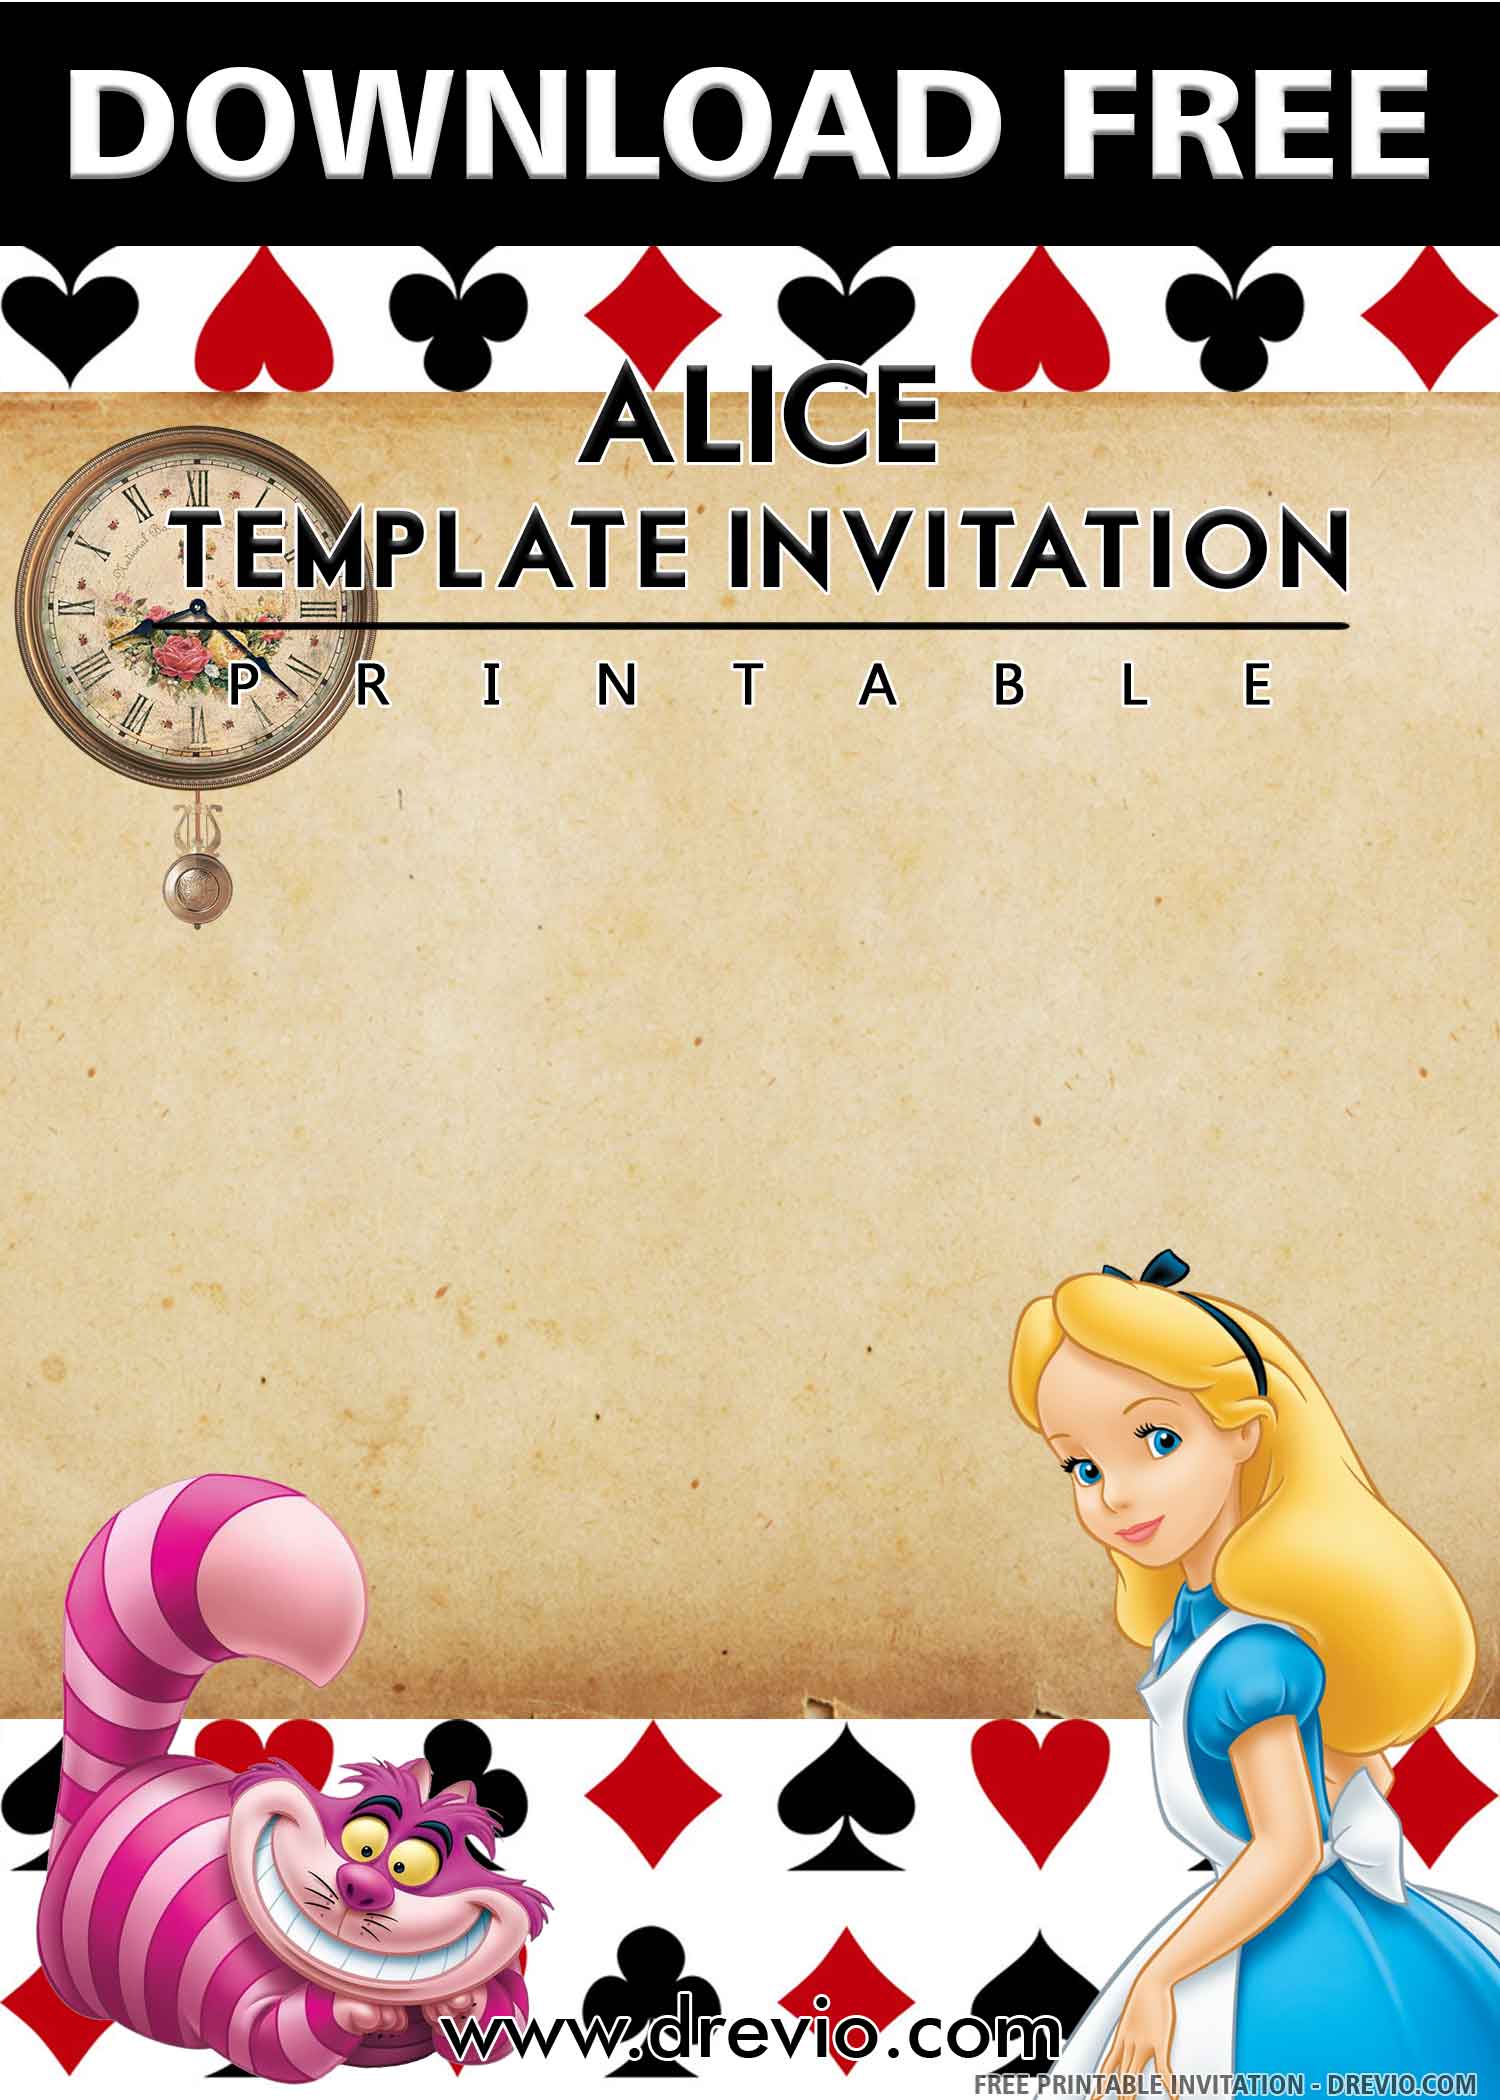 Alice in Wonderland Birthday Invitation watermark Download Hundreds